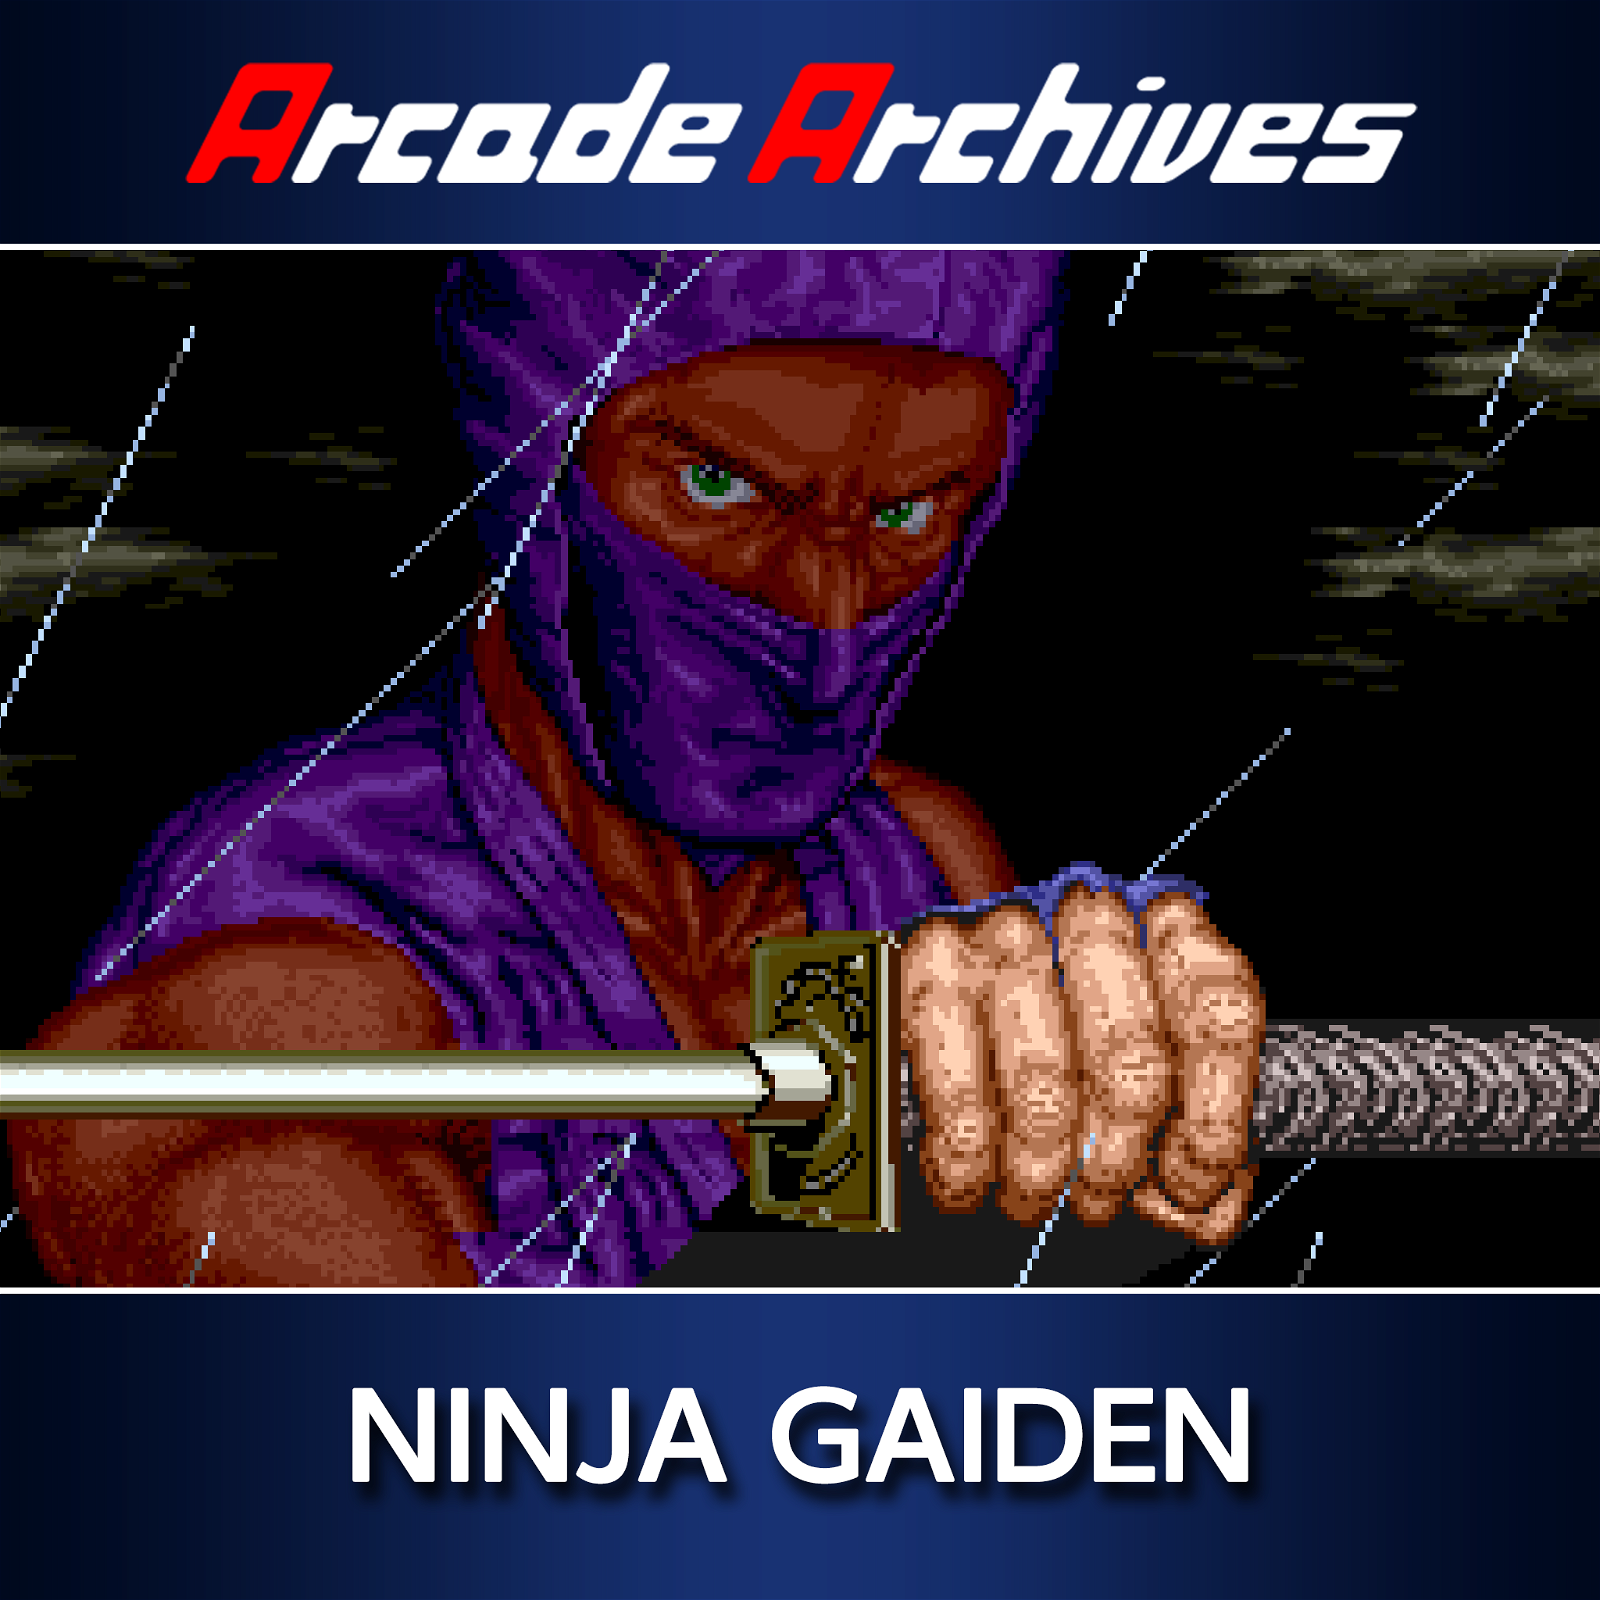 Image of Arcade Archives Ninja Gaiden